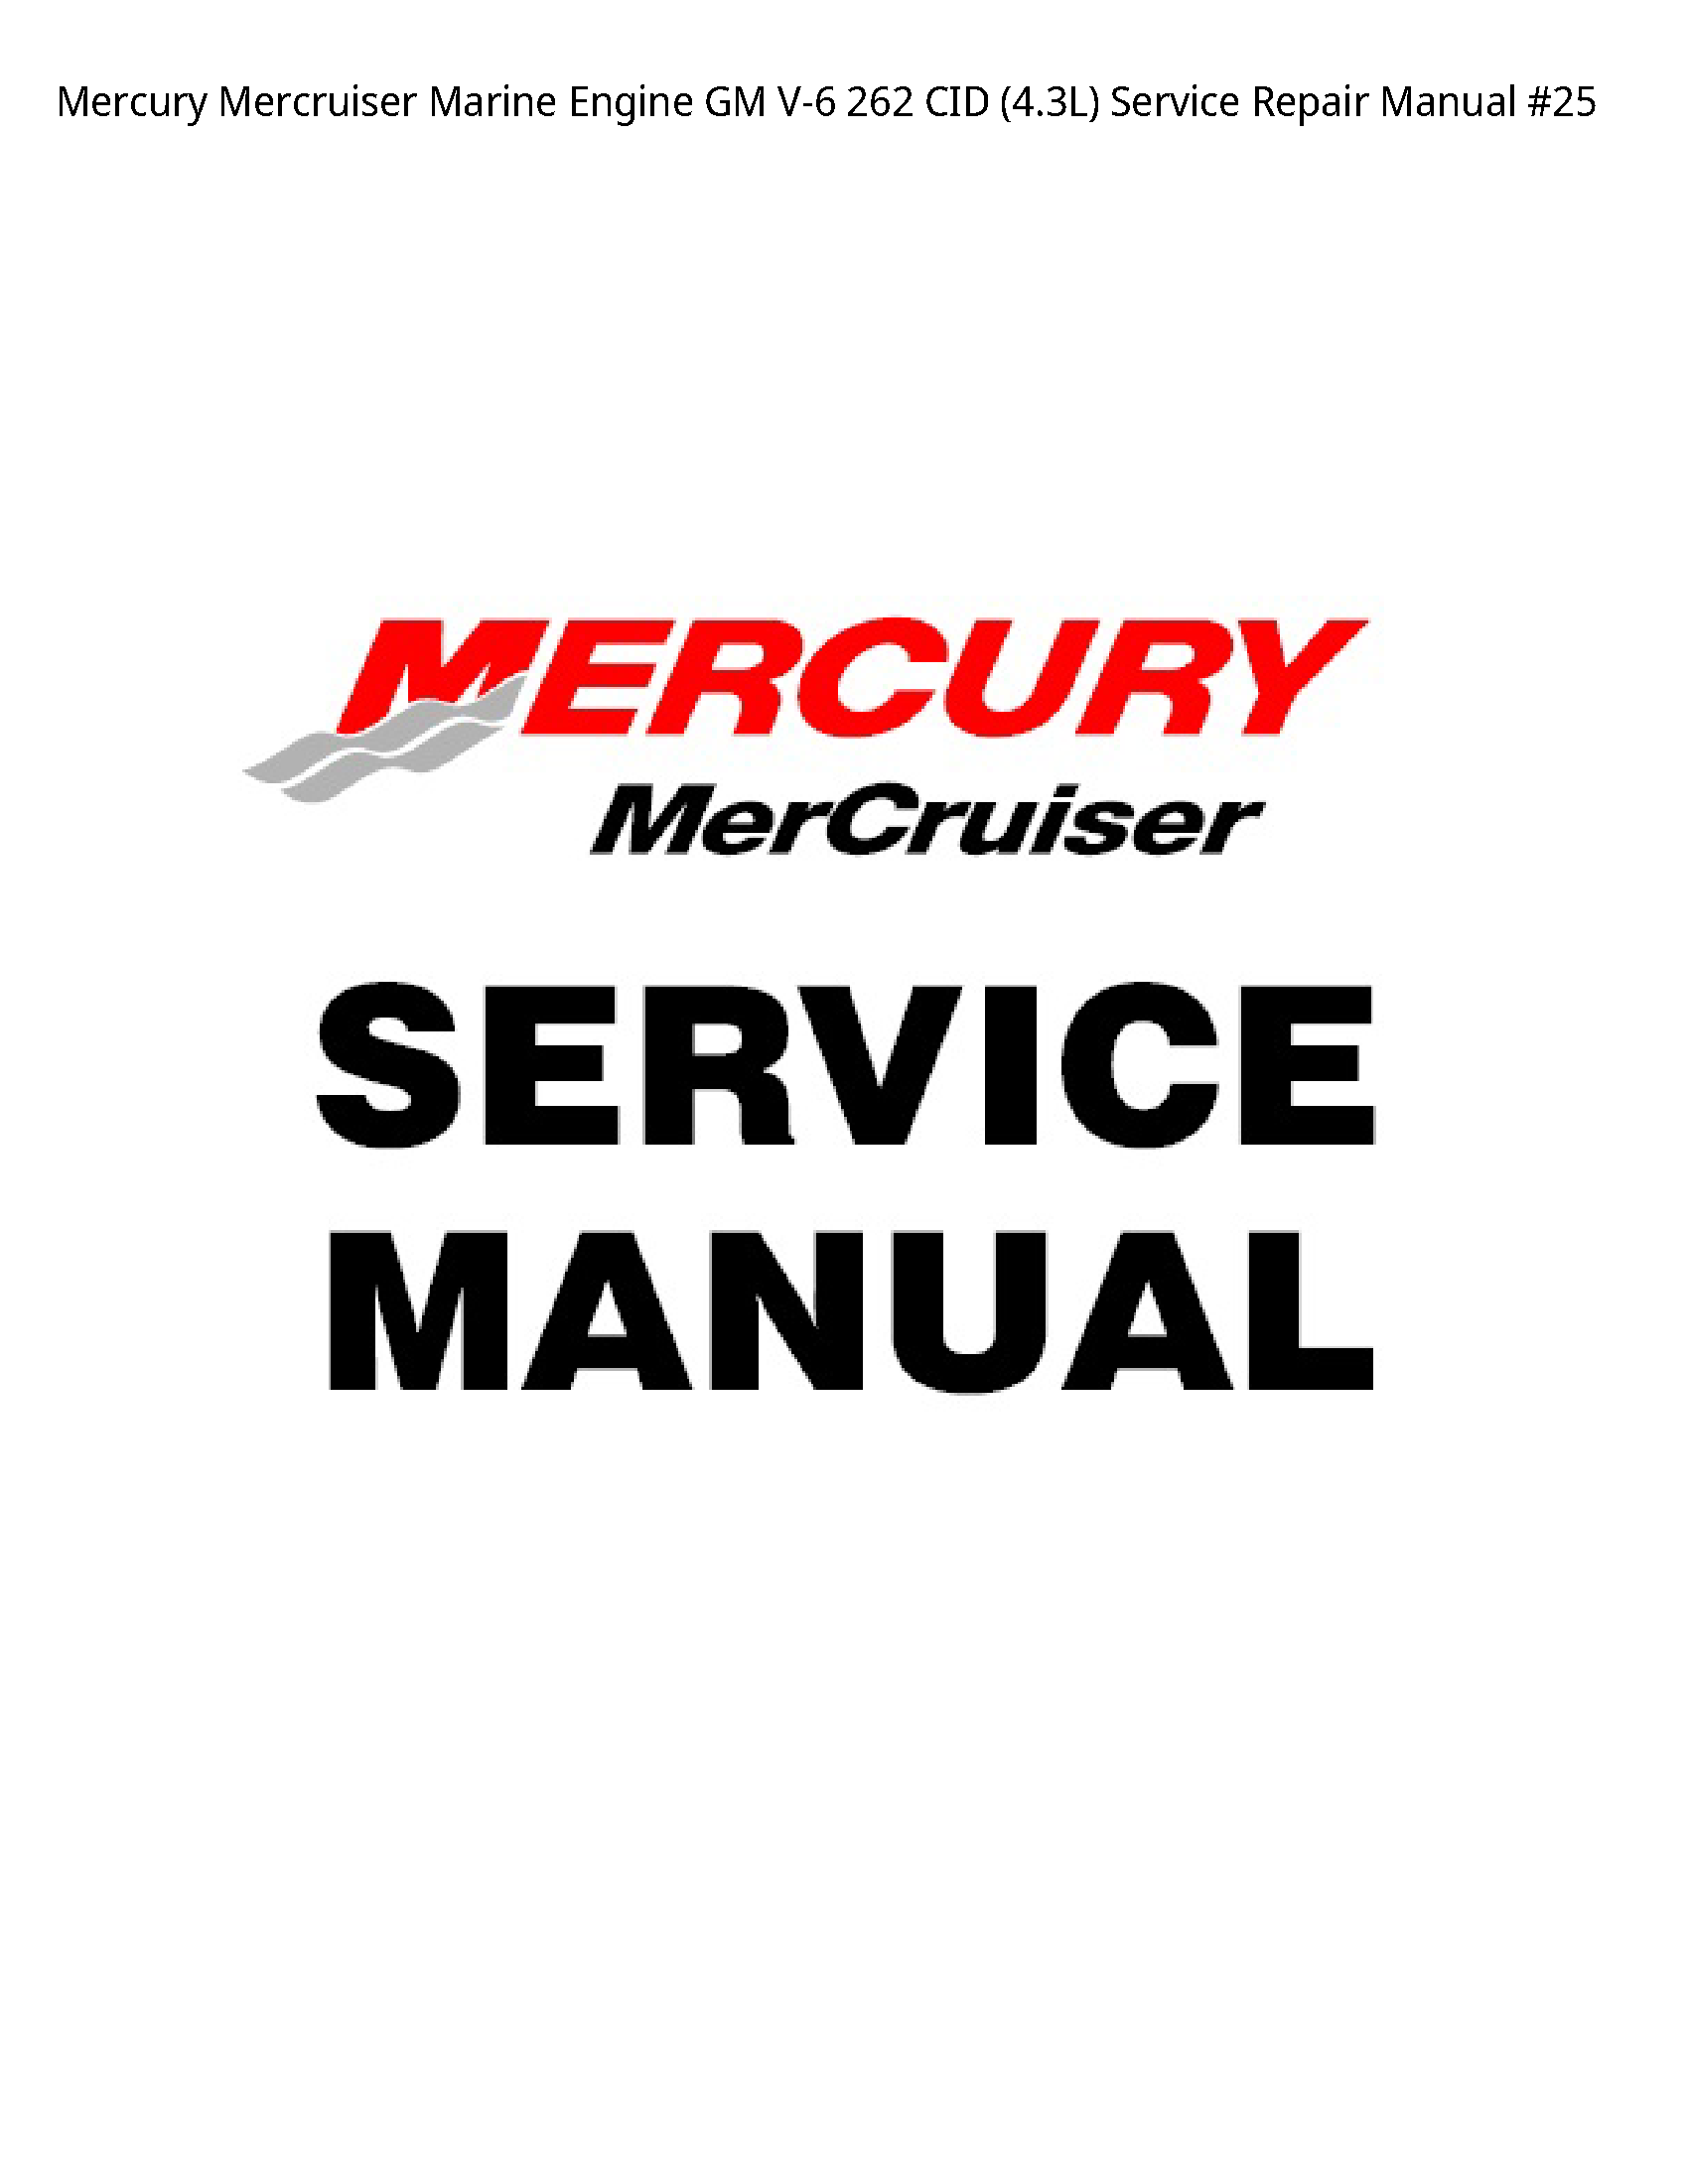 Mercury V-6 Mercruiser Marine Engine GM CID manual